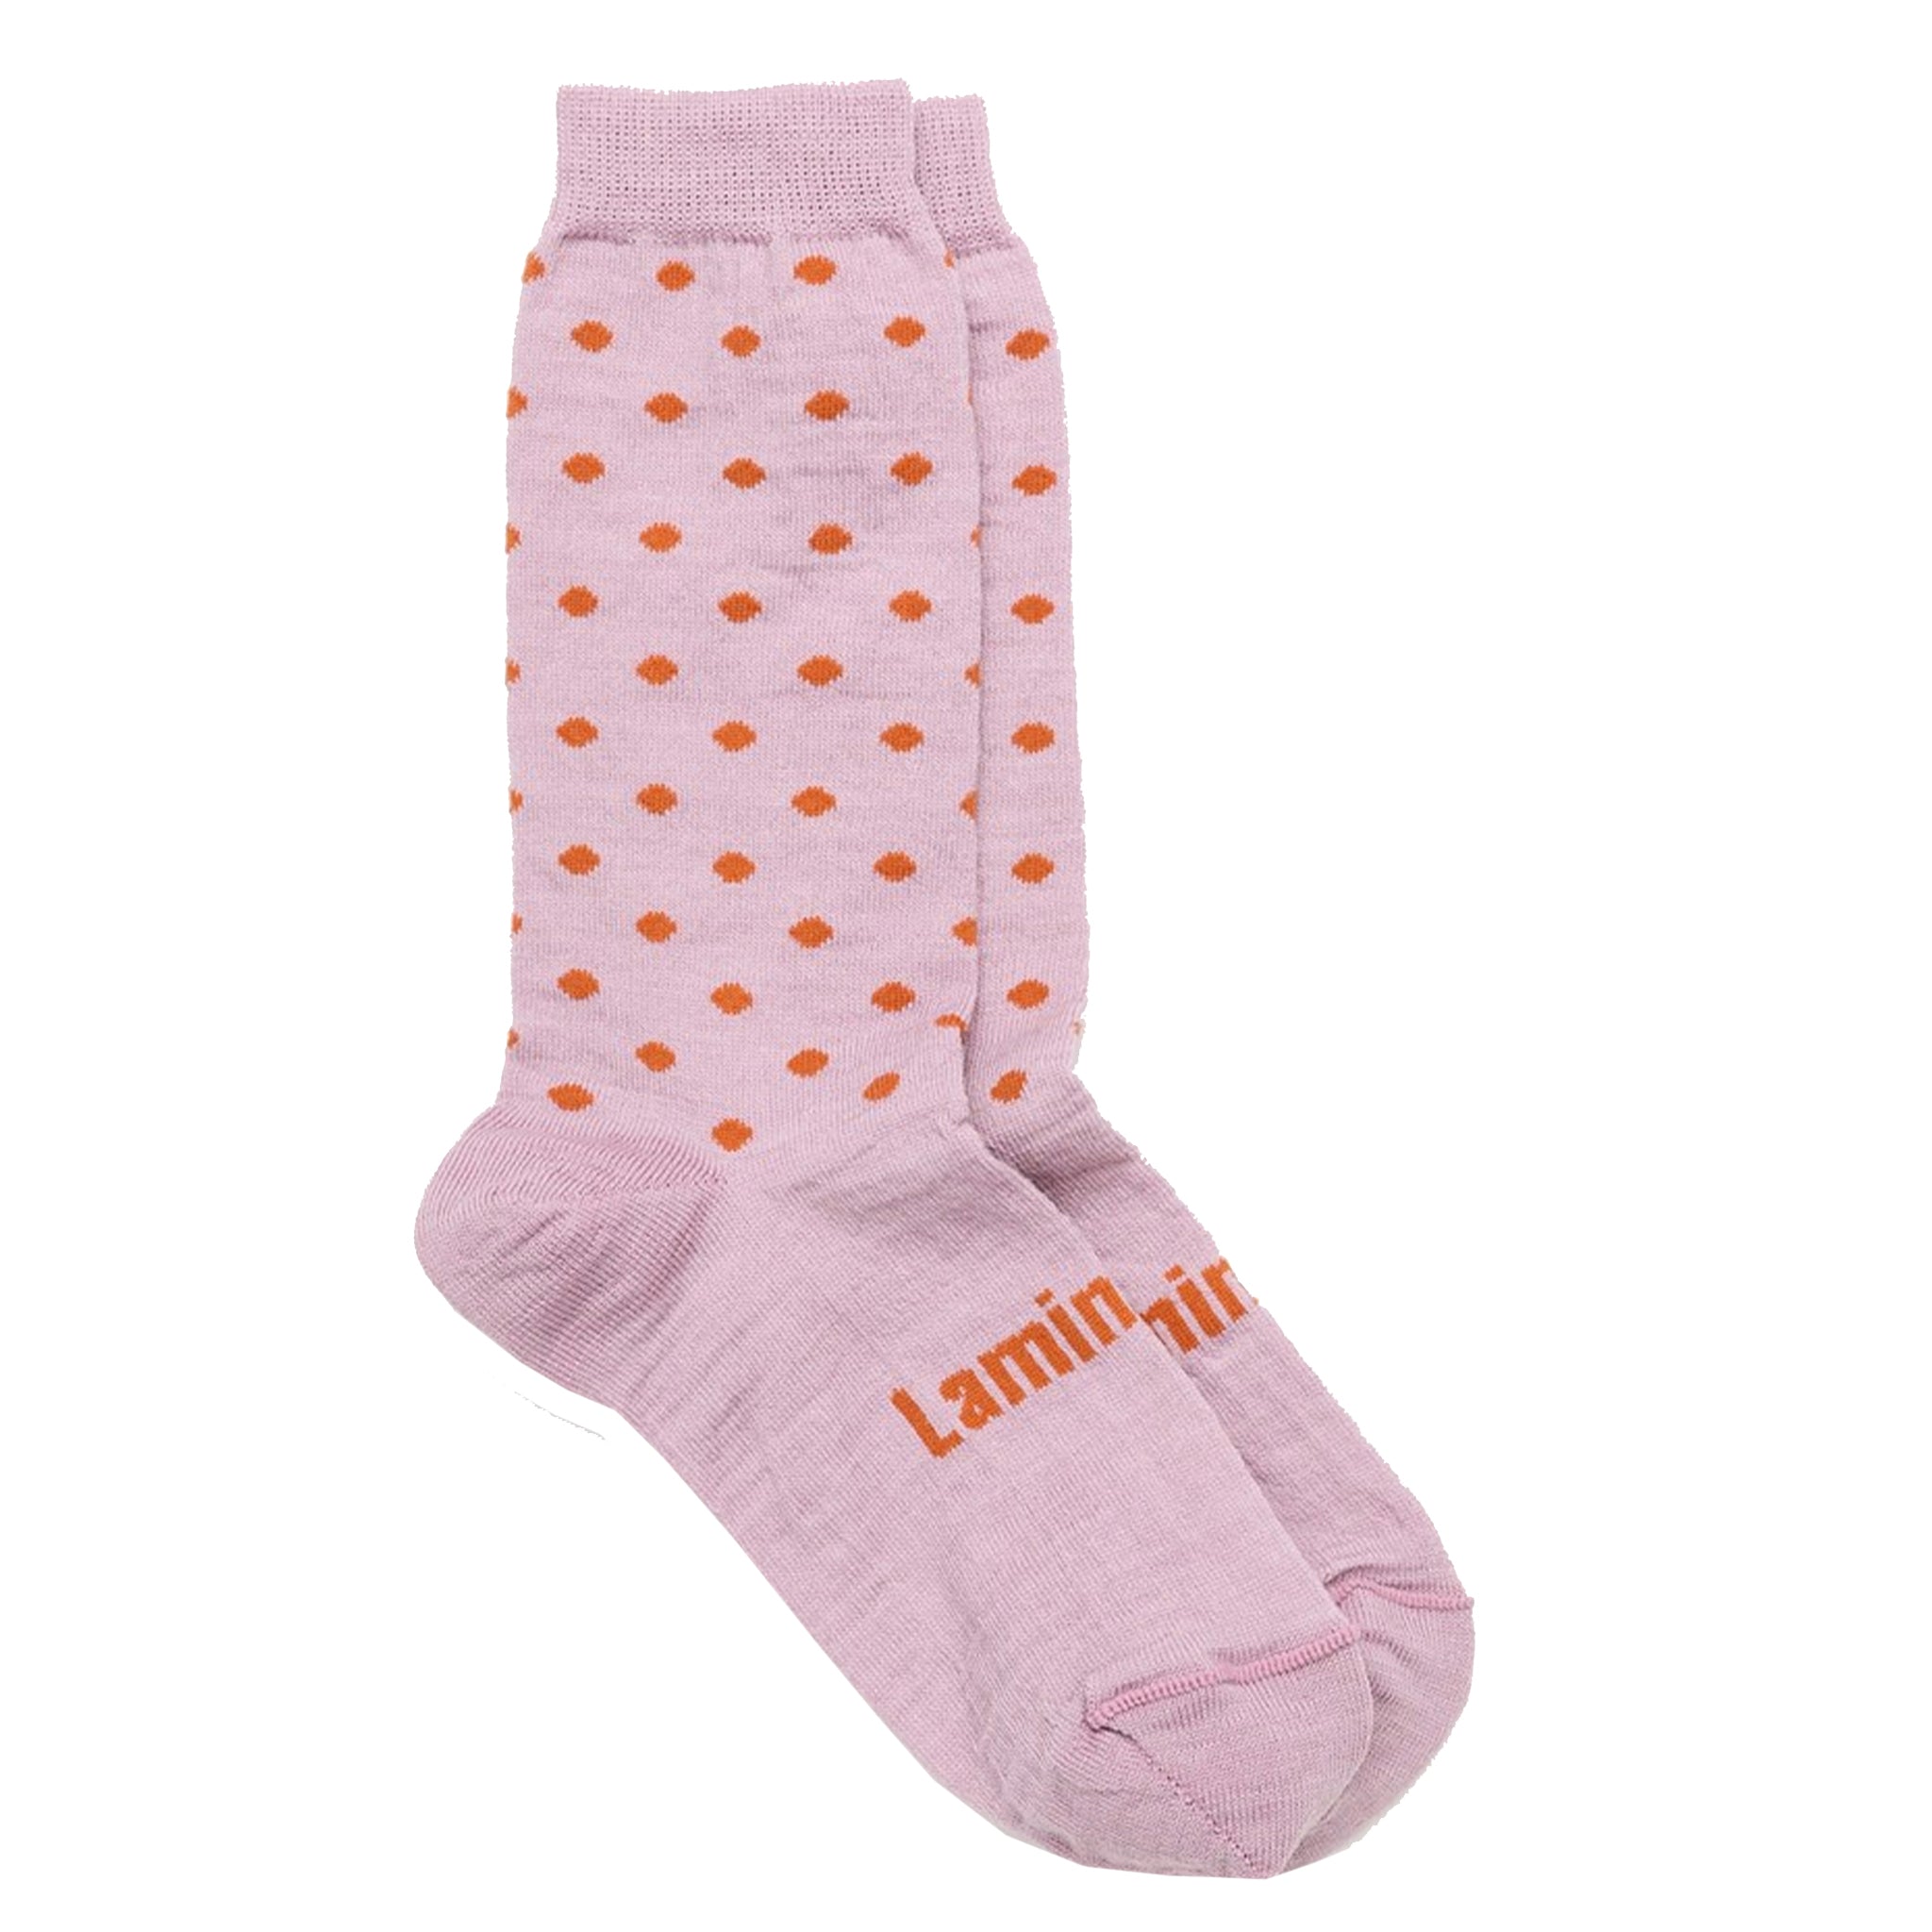 Lamington Merino Crew Baby Socks - Tallulah